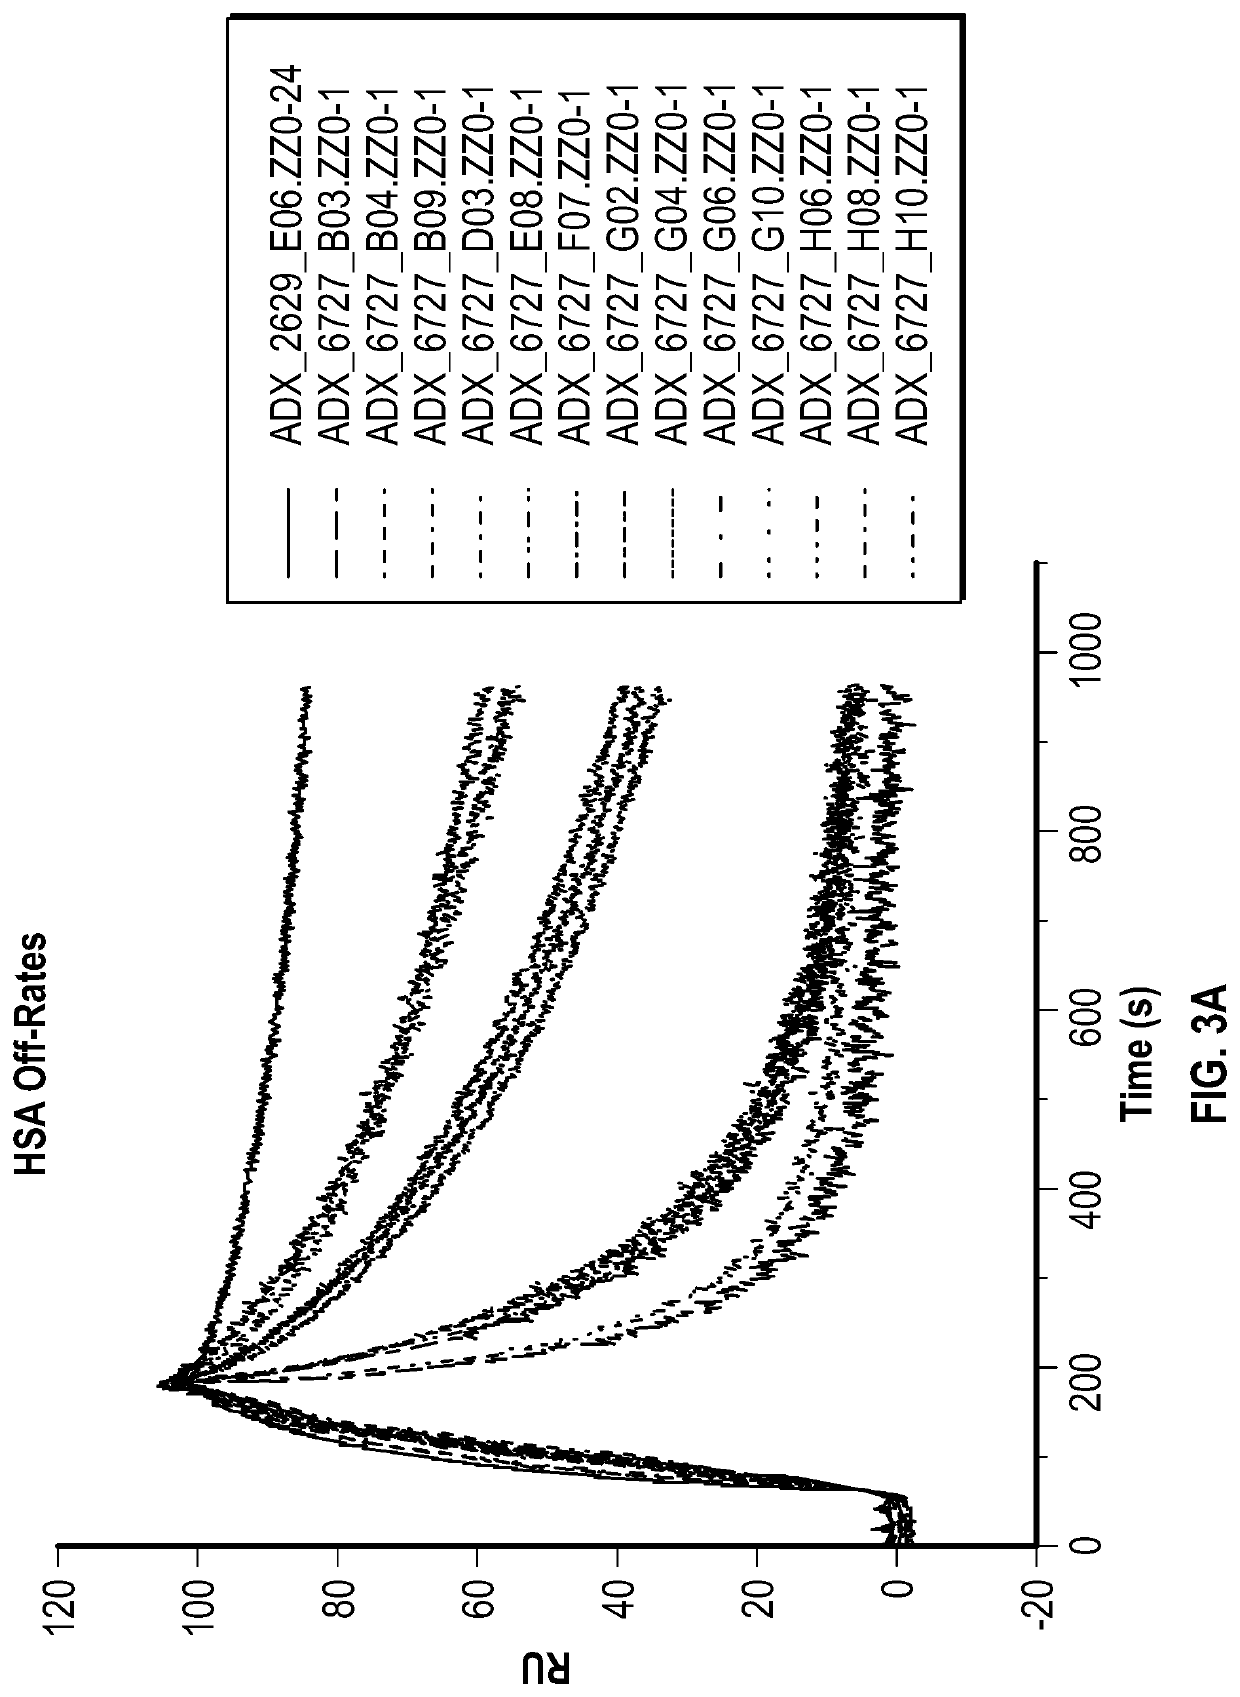 Fast-off rate serum albumin binding fibronectin type III domains